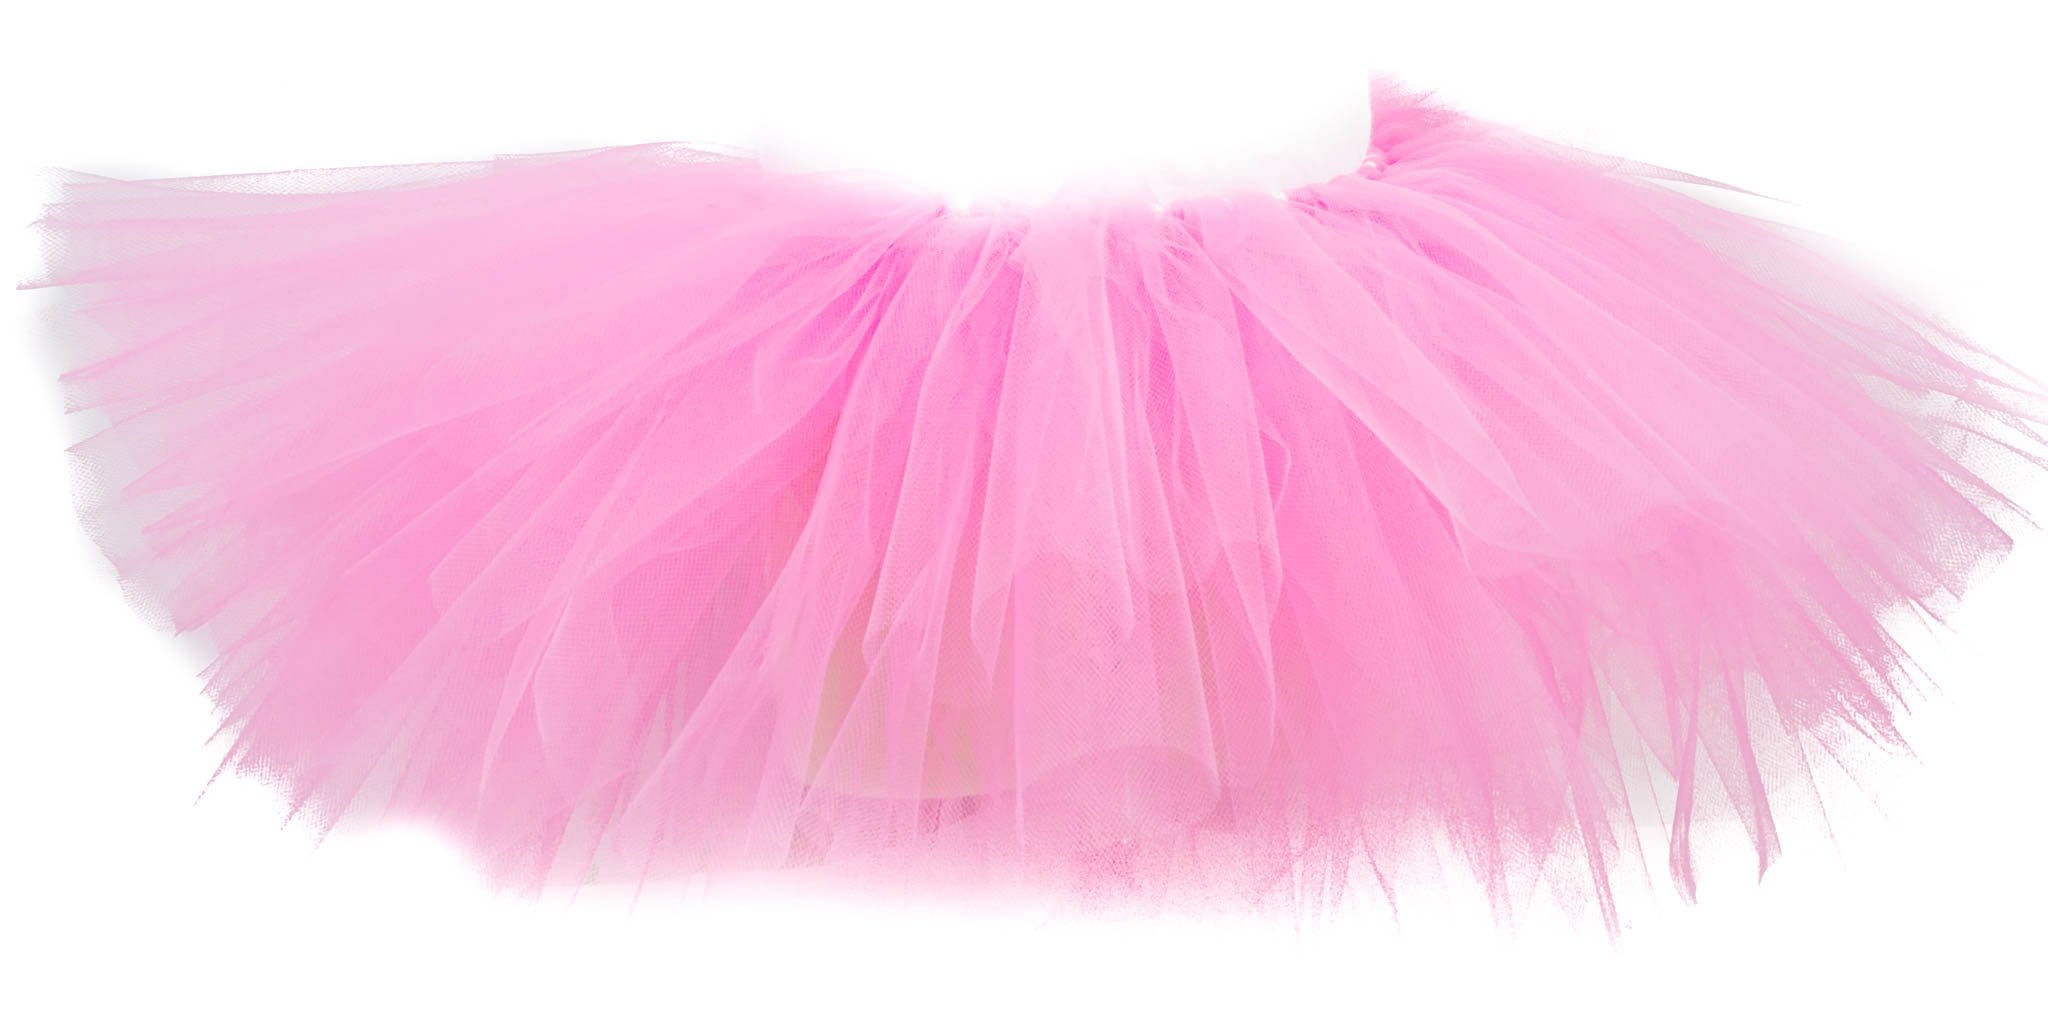 bright pink tutu skirt